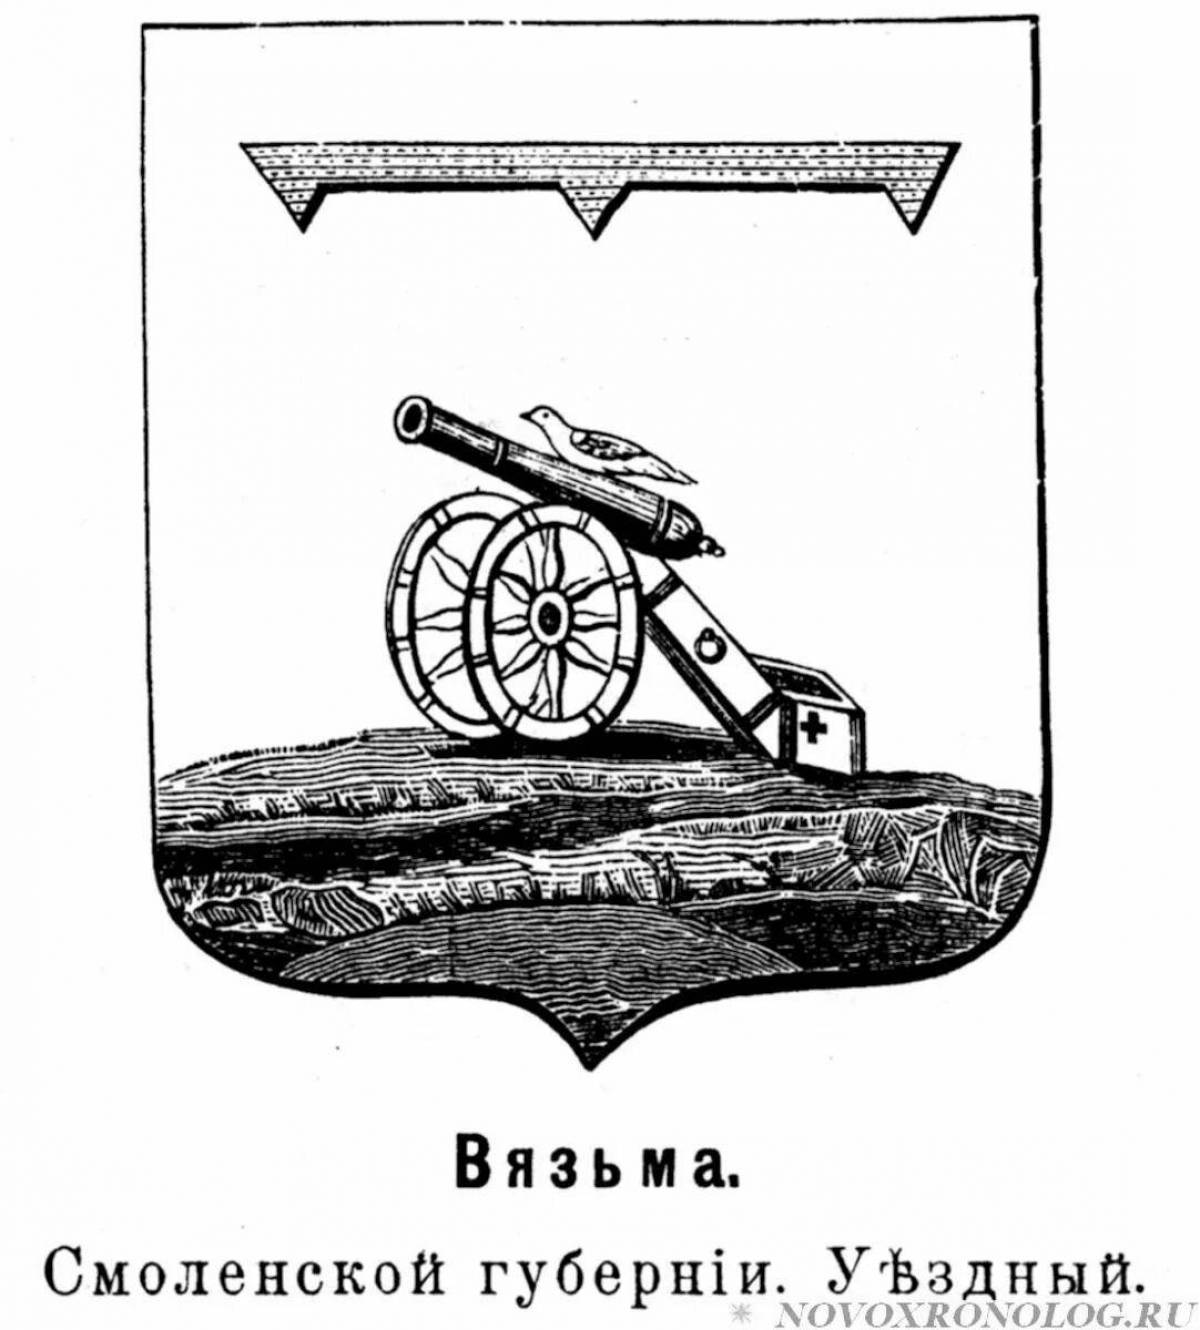 Elegant coloring coat of arms of smolensk